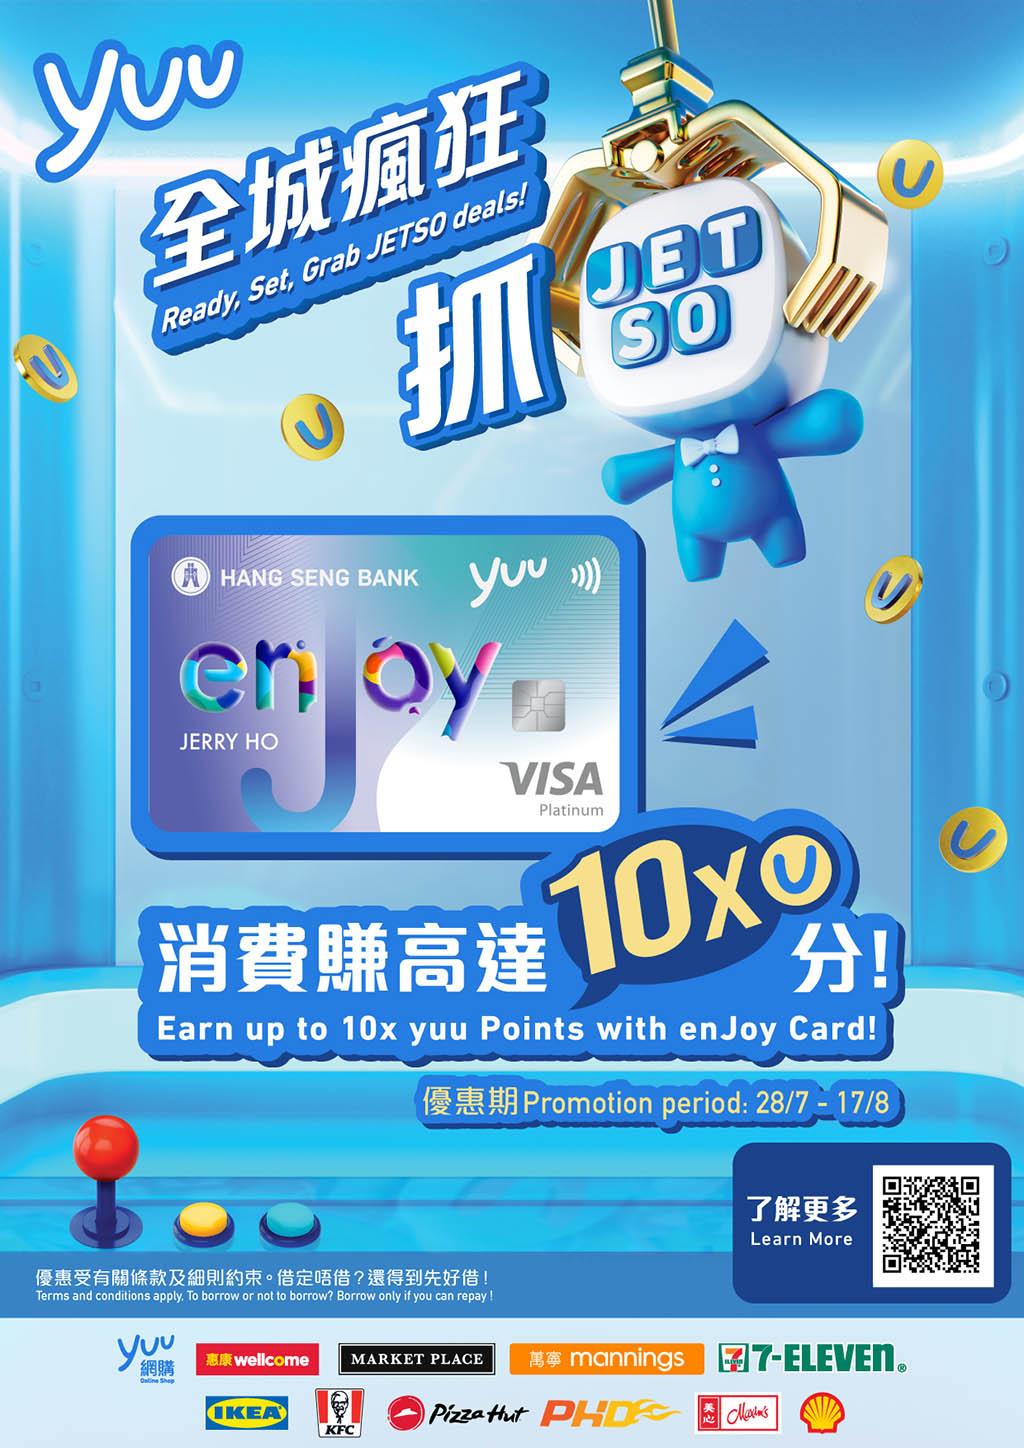 「yuu全城瘋狂抓JETSO」活動：以恒生enJoy卡於指定商戶消費，單一簽賬可獲贈高達6倍yuu分。（圖片由相關機構提供）